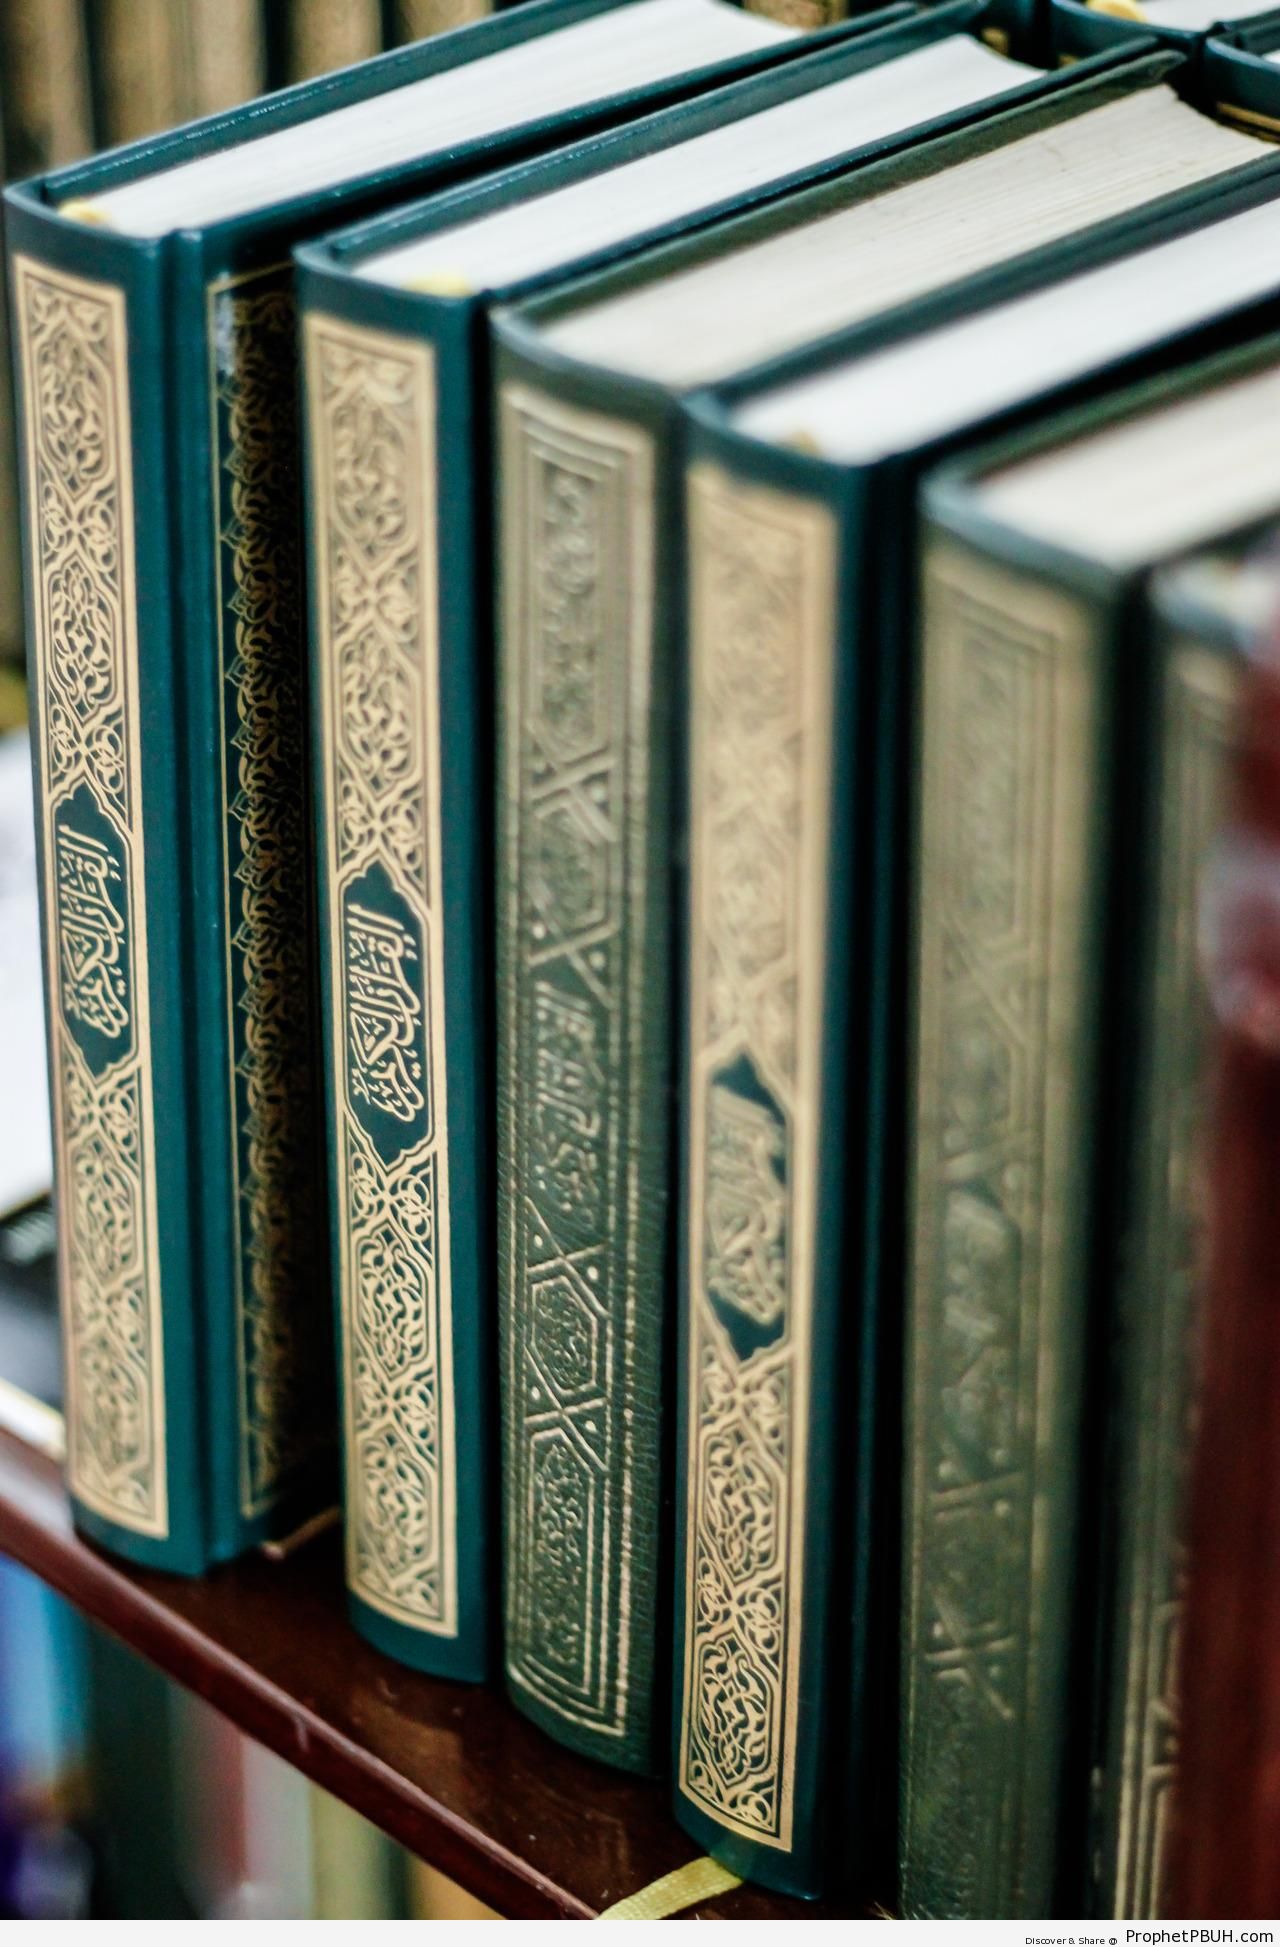 Quran Books on Shelf - Mushaf Photos (Books of Quran) 